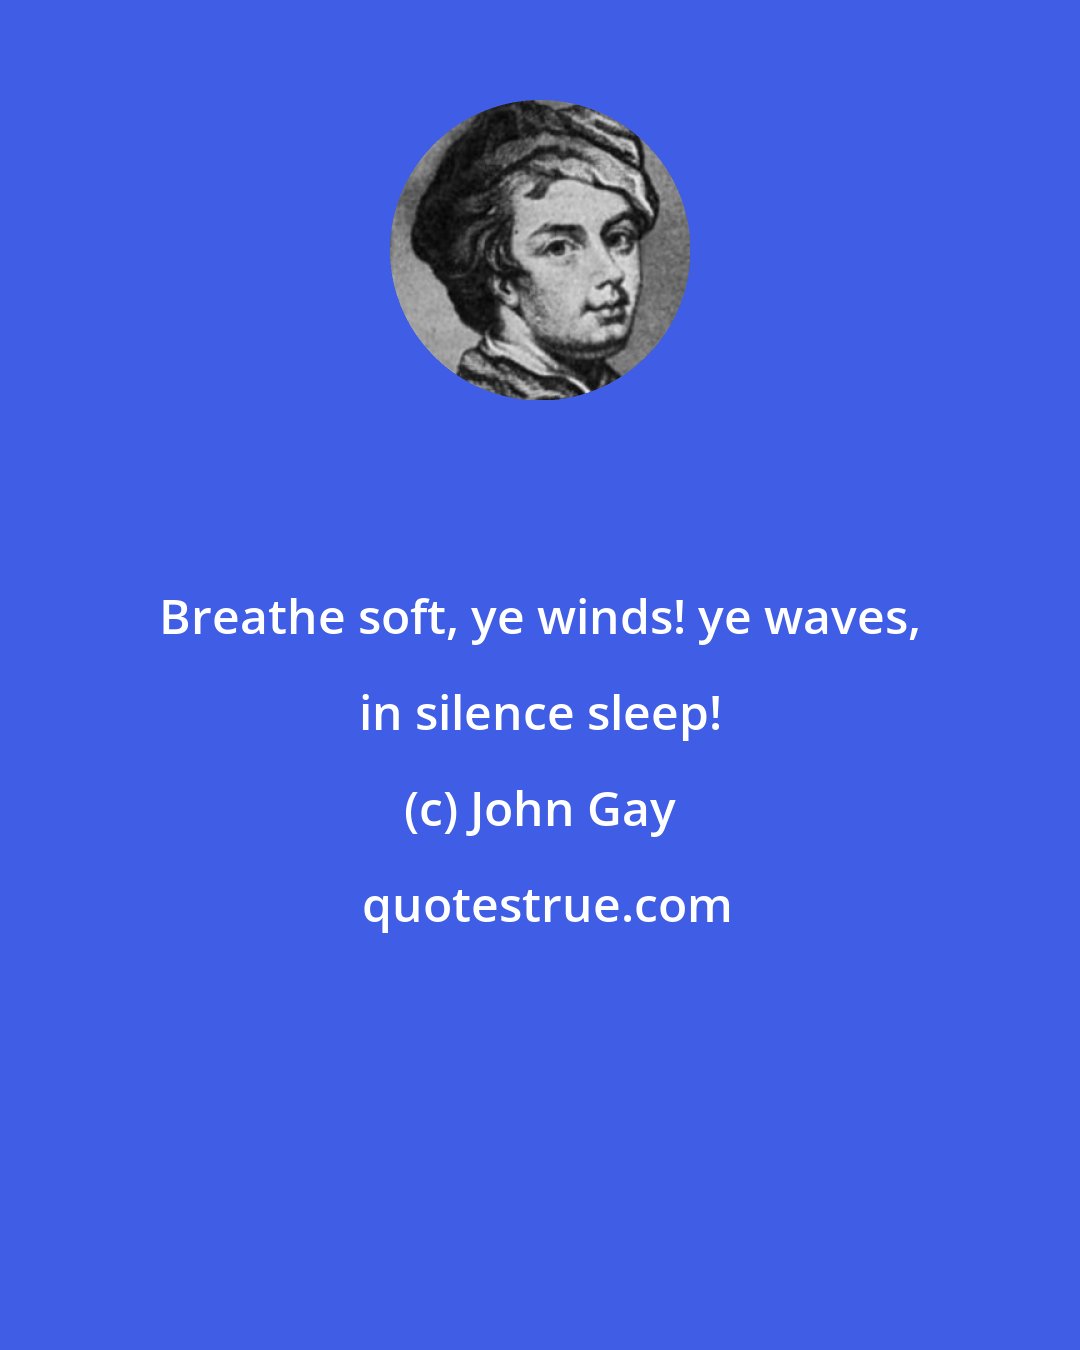 John Gay: Breathe soft, ye winds! ye waves, in silence sleep!